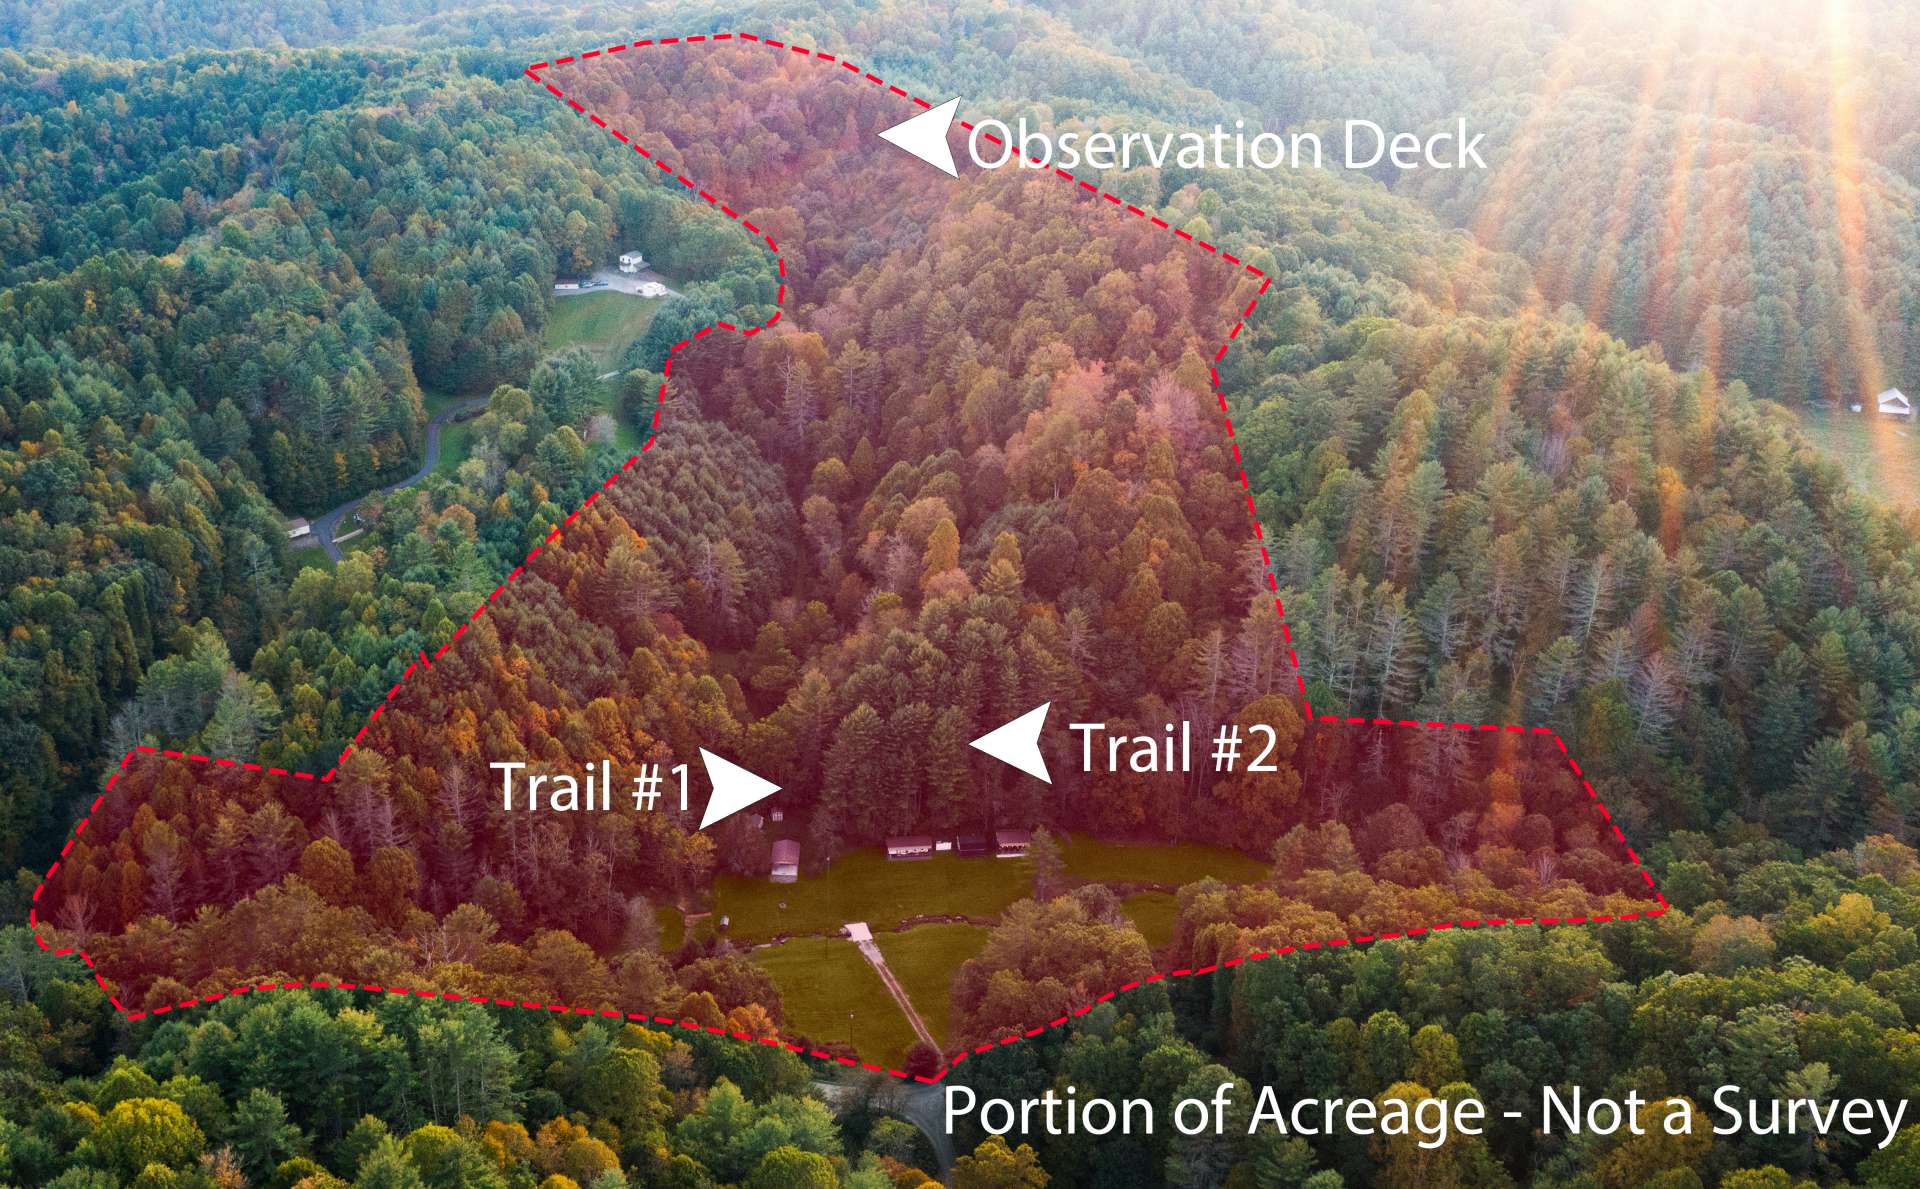 Portion of Acreage Showing Trails & Deck Location